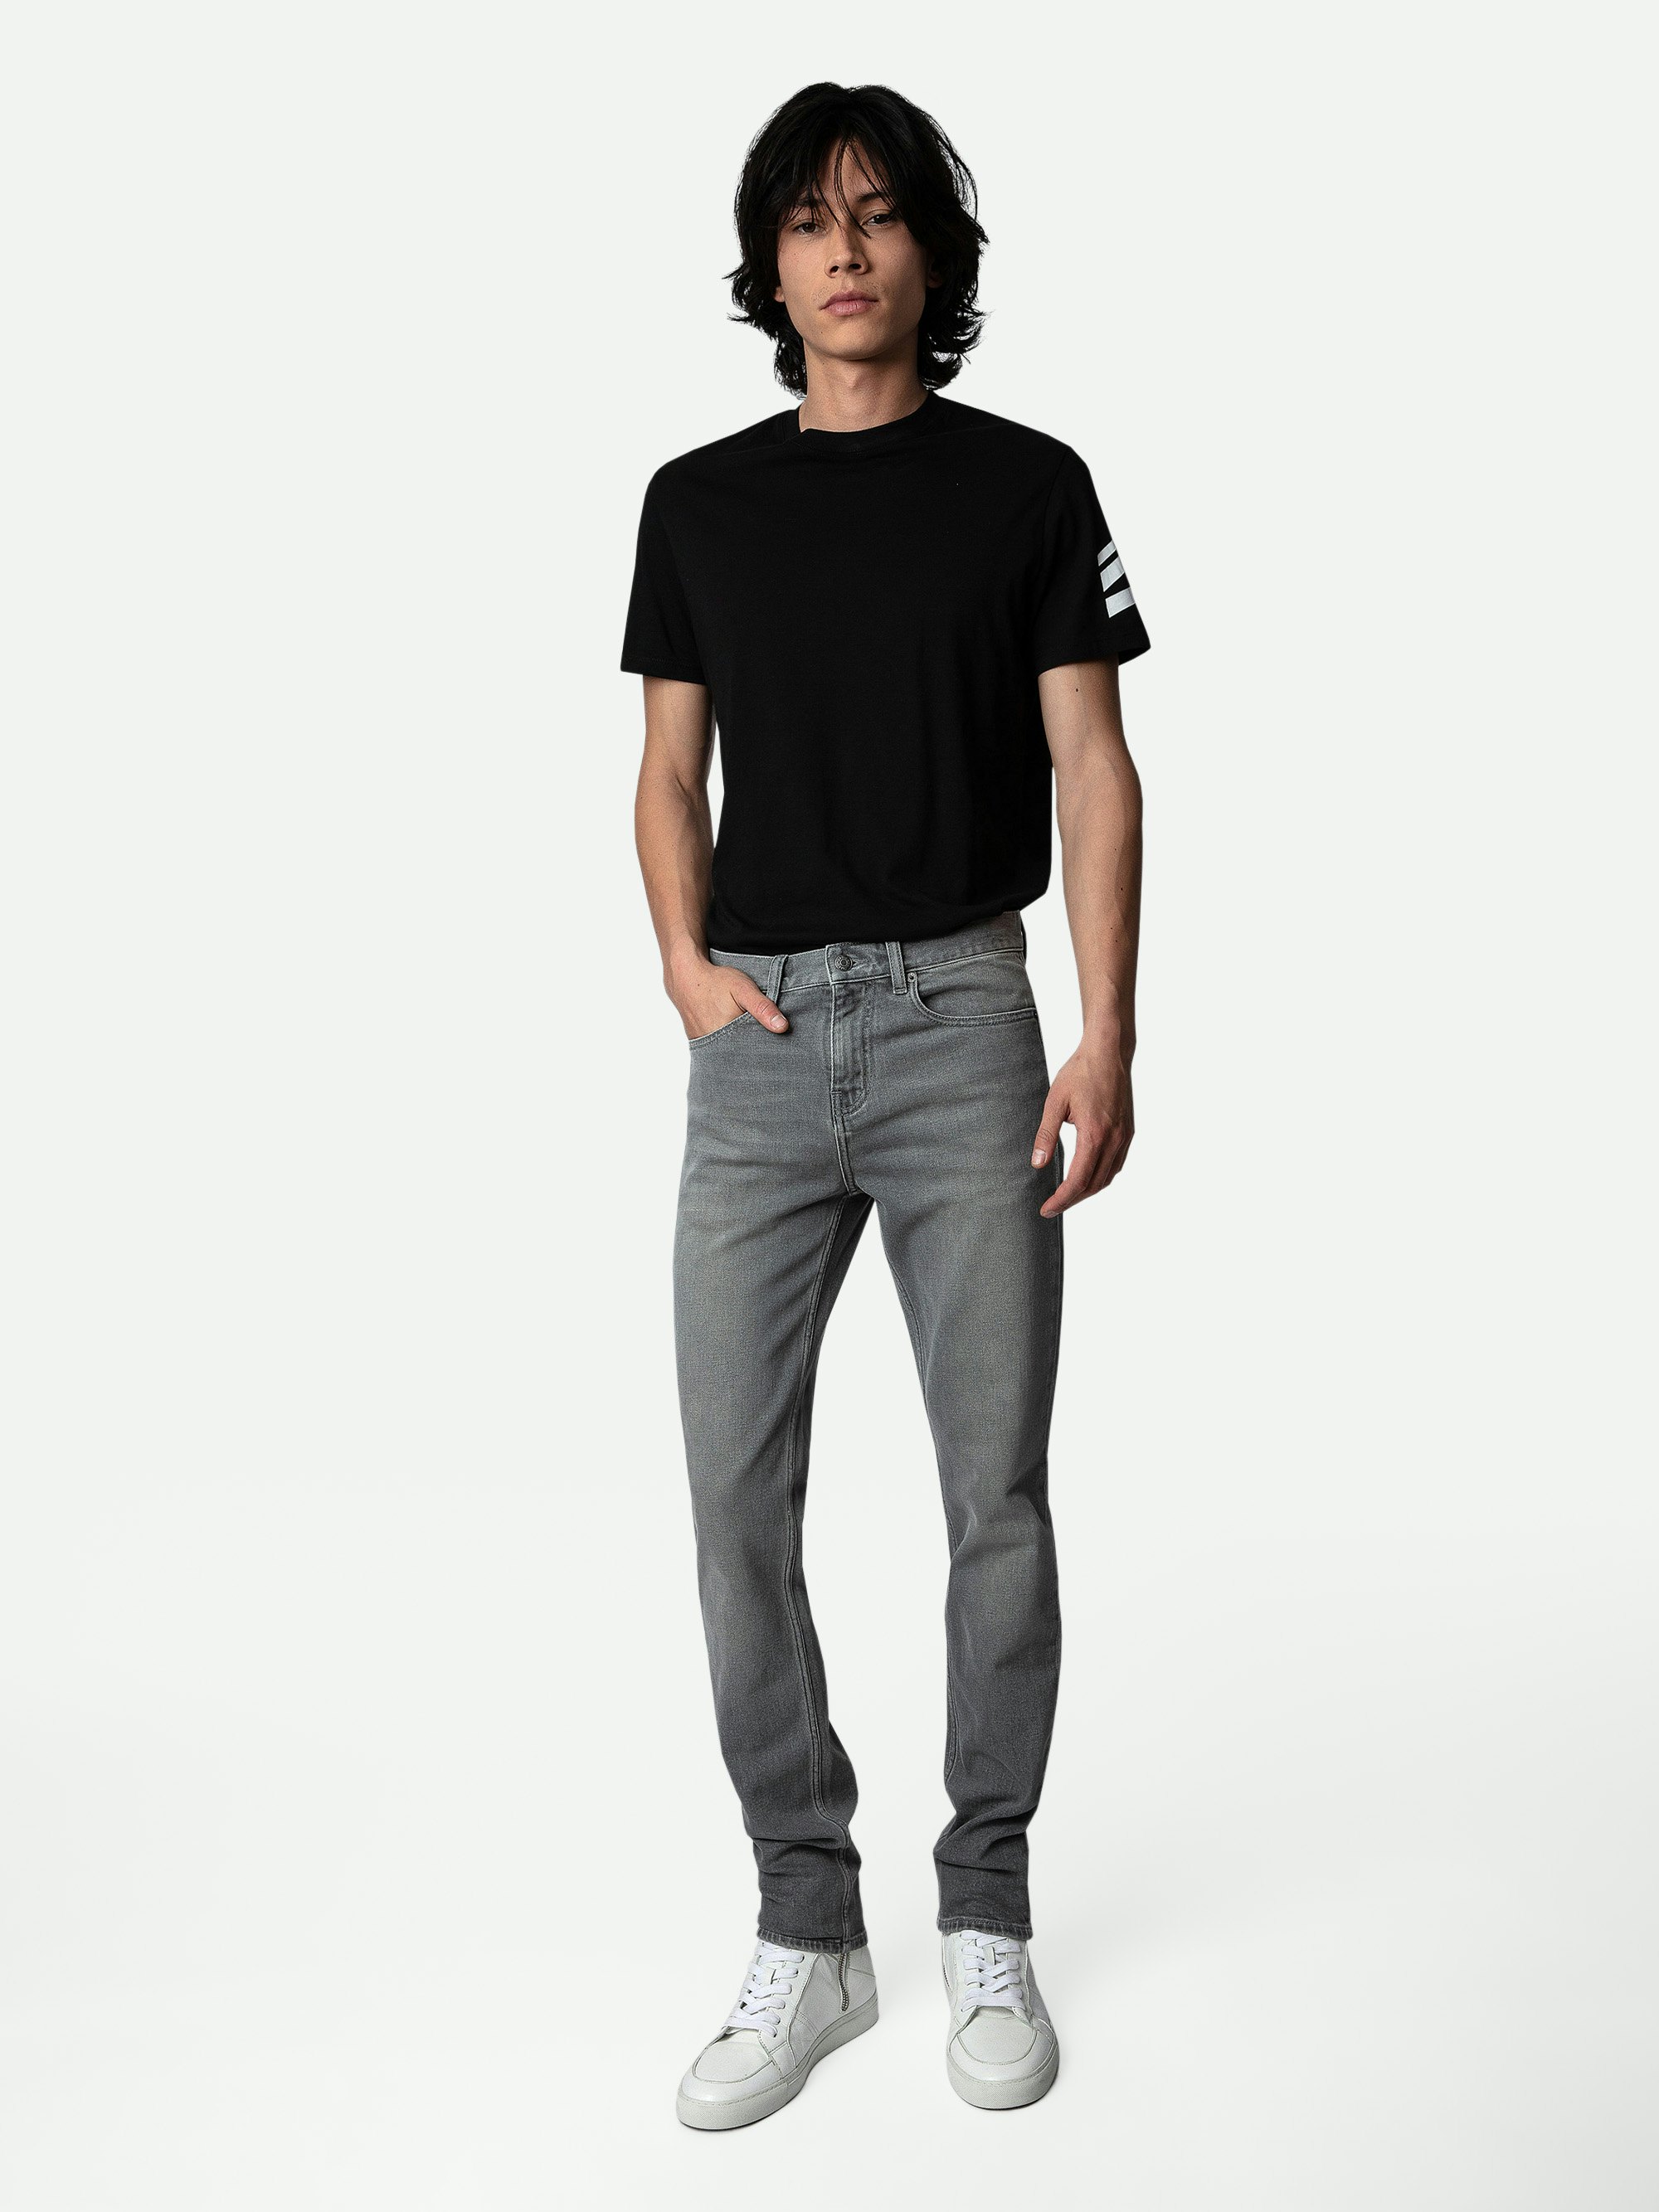 Jeans Steeve  - Graue Regular-Herrenjeans aus Denimstoff